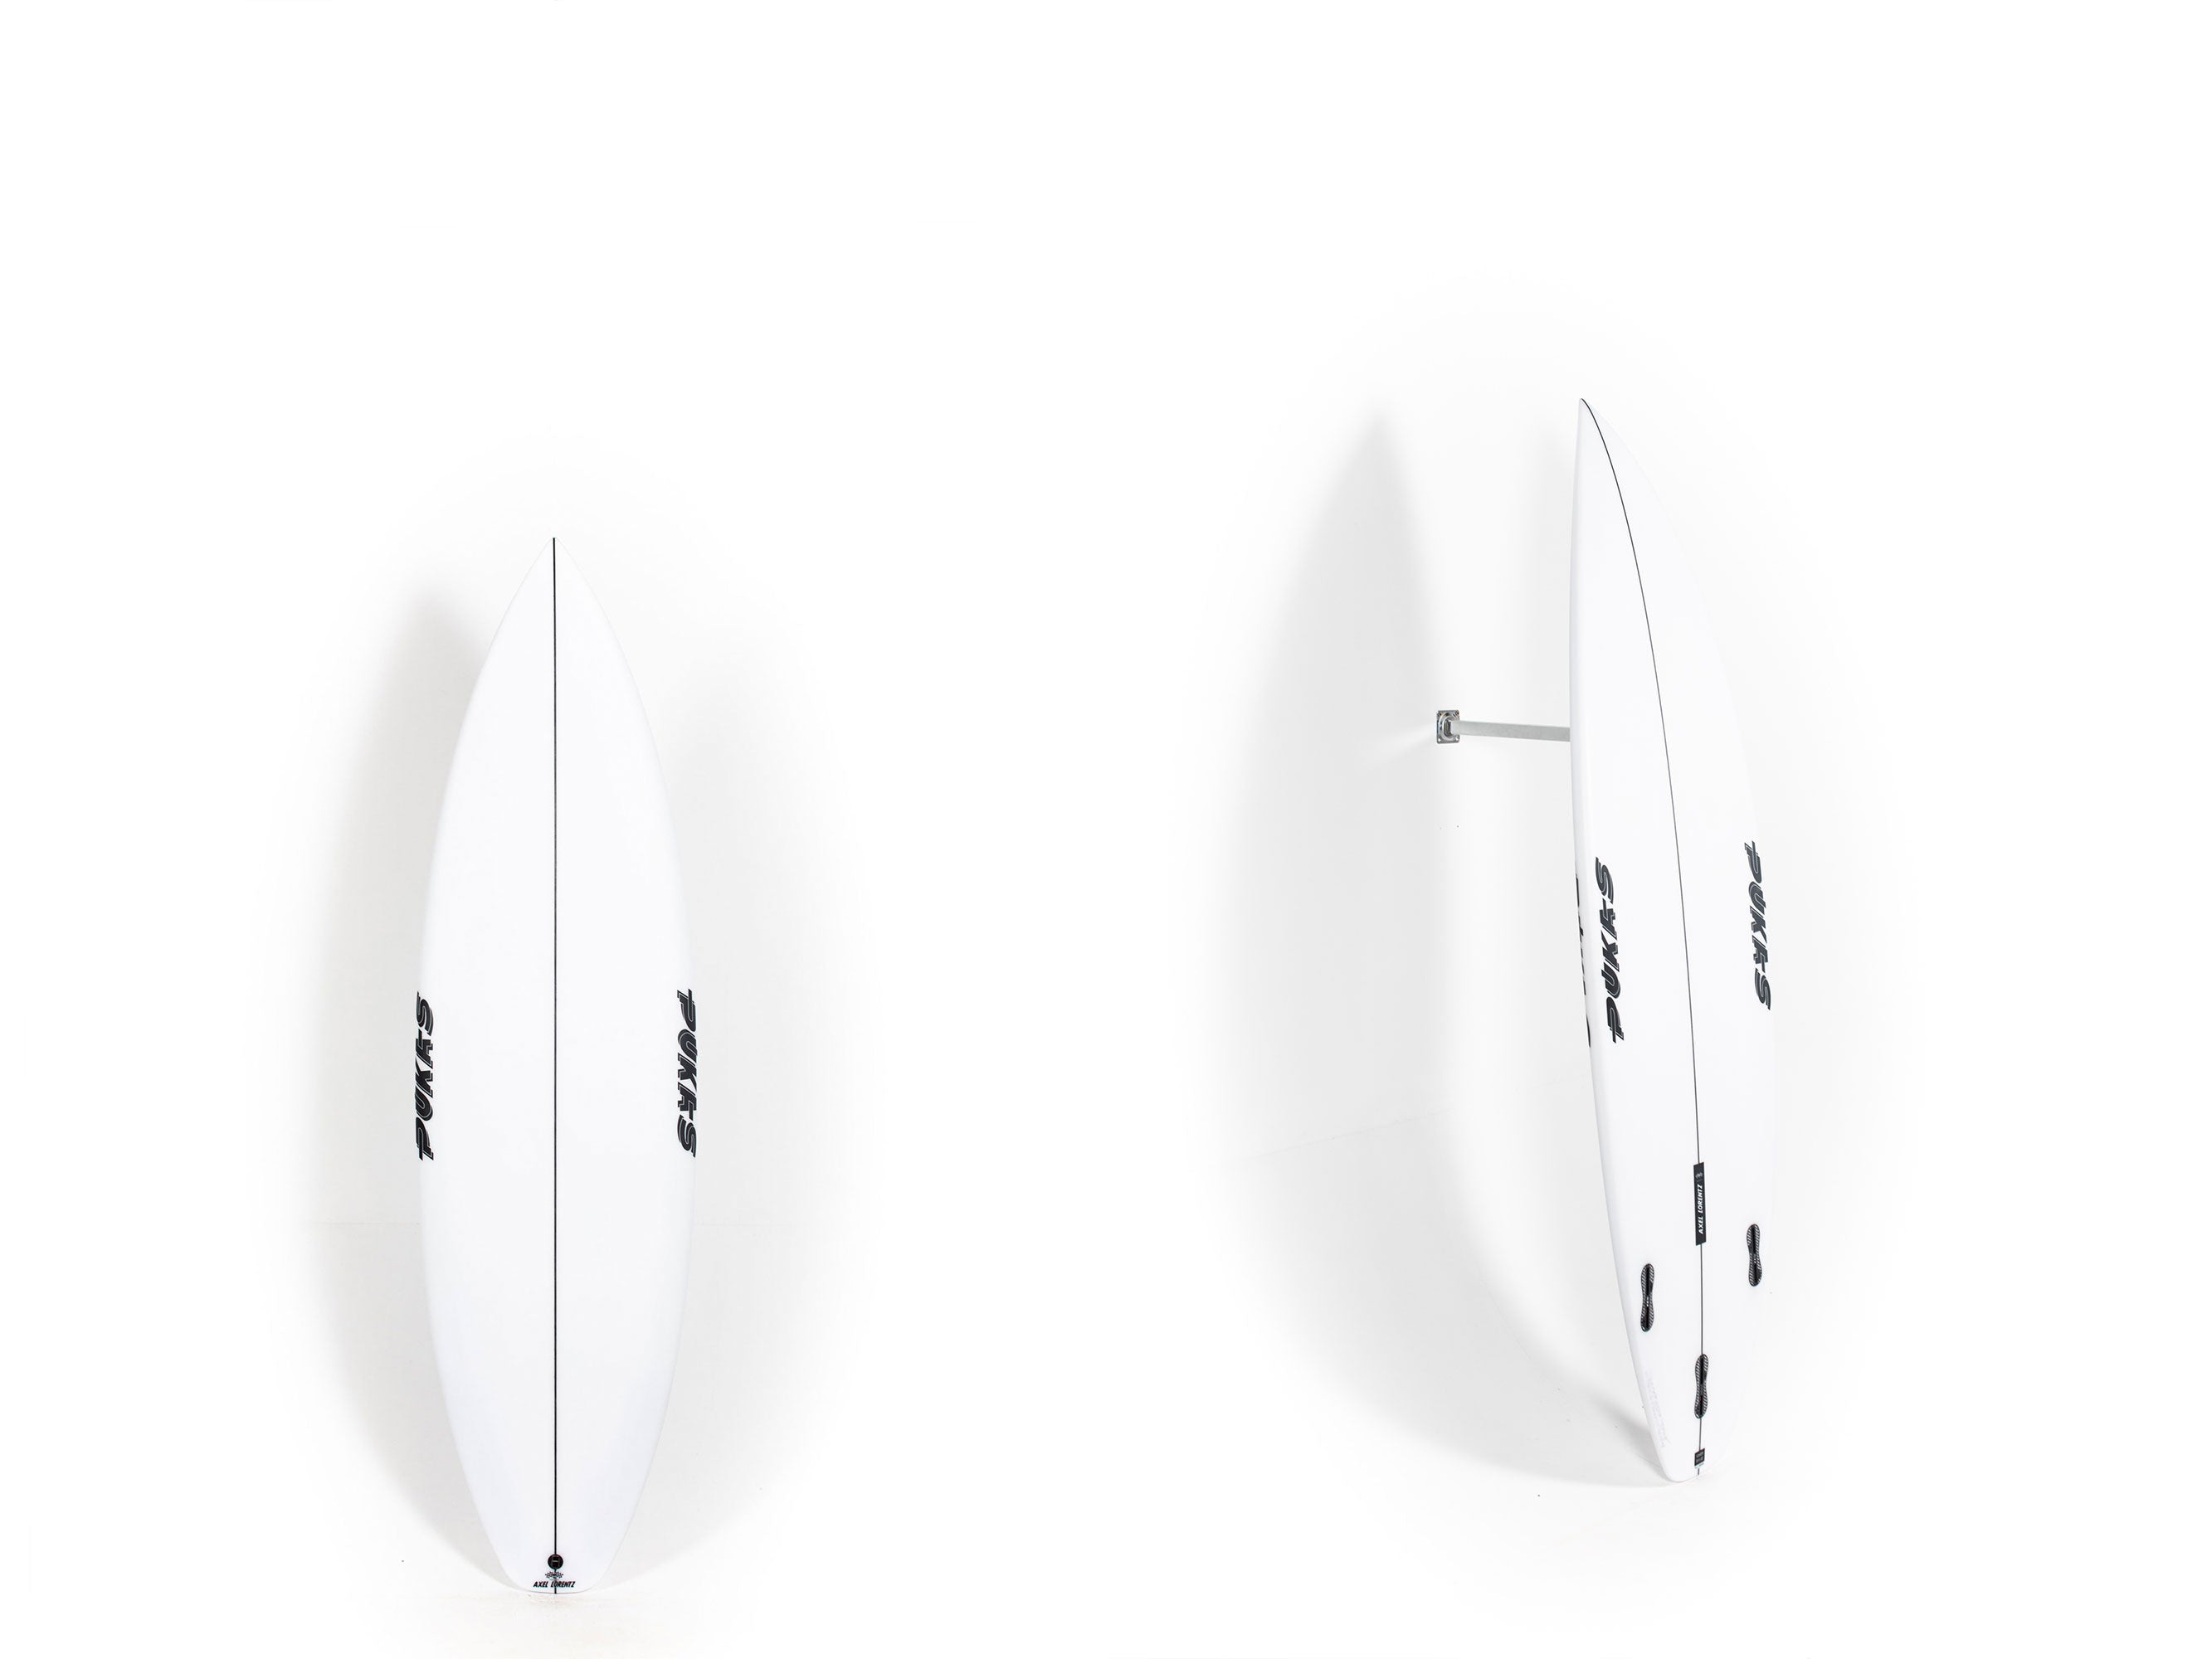 Pukas Surfboard - TASTY TREAT ALL ROUND by Axel Lorentz - 6'0" x 19.63 x 2.55 x 31.97L - AX08274